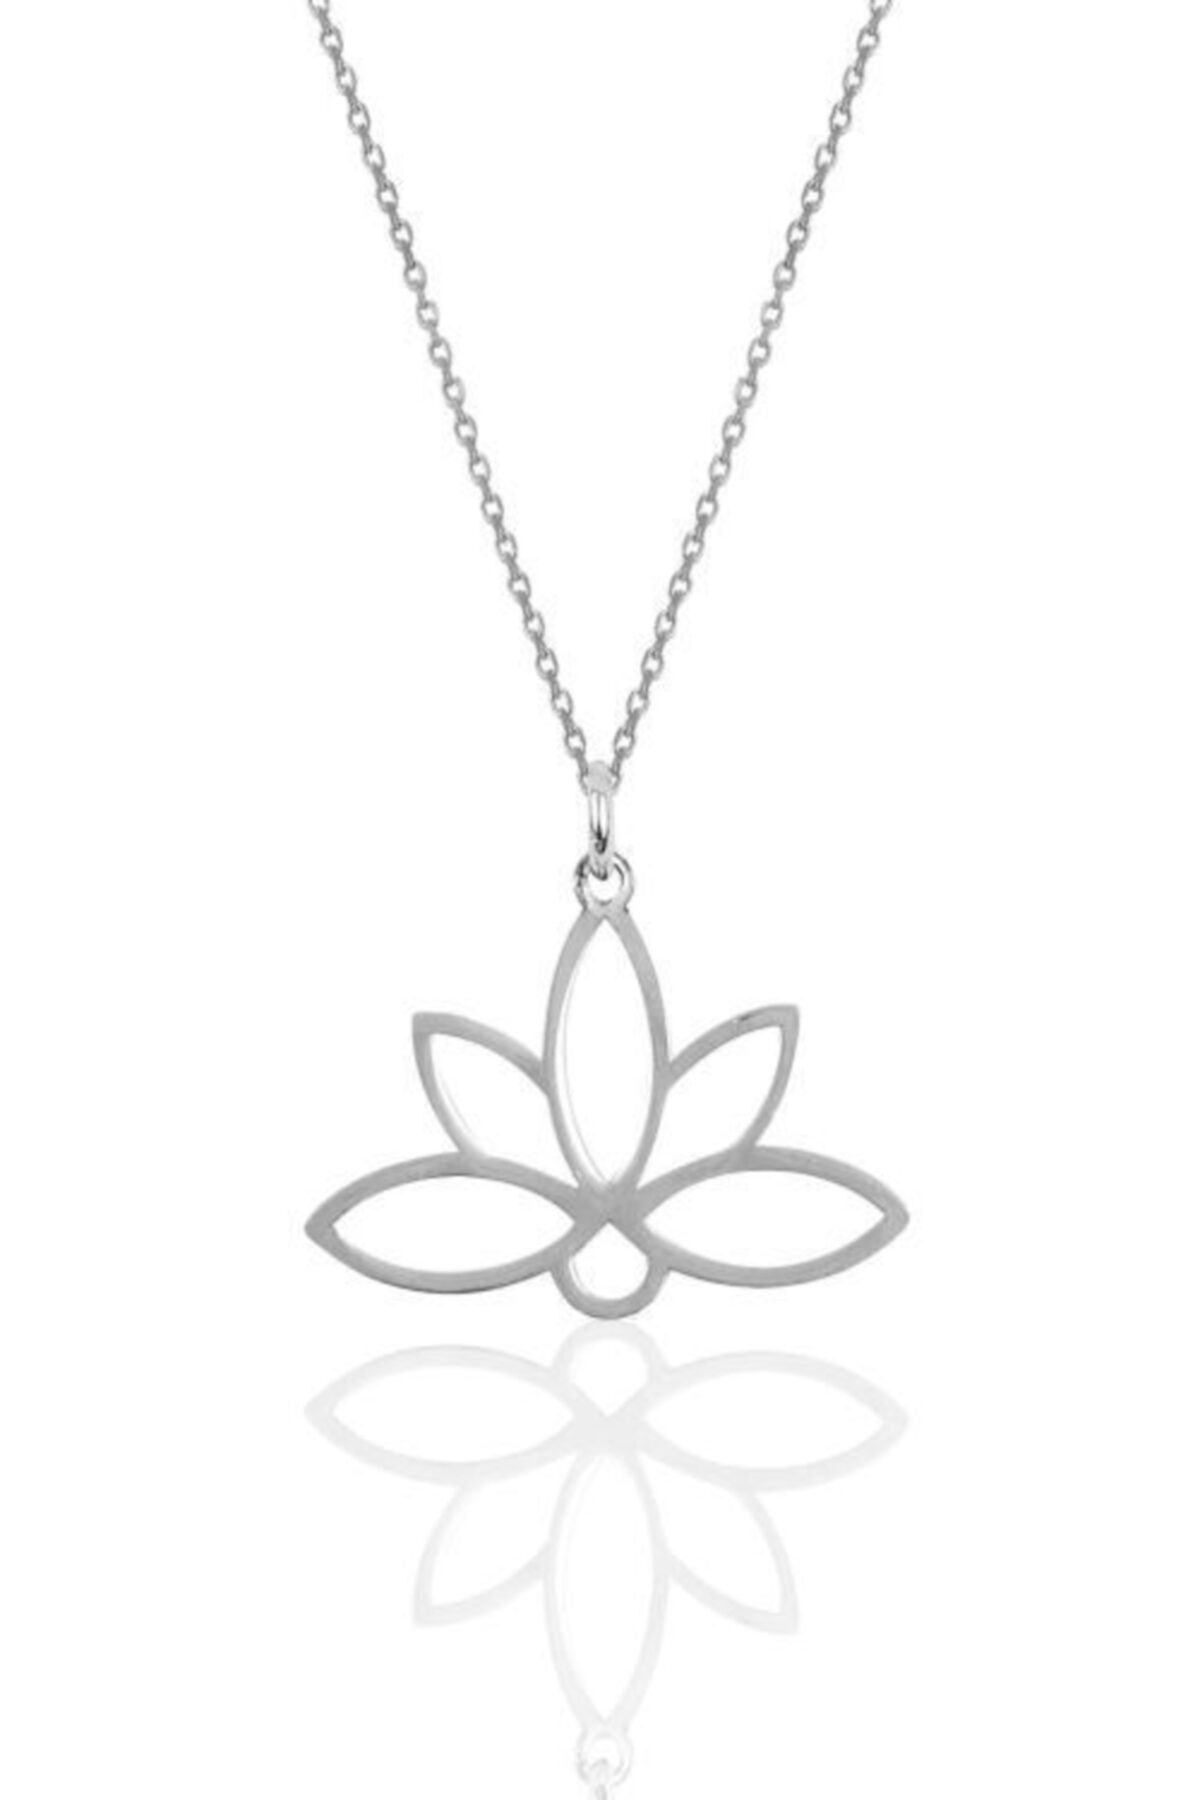 Papatya Silver 925 Ayar Gümüş Lotus Çiçeği Kolye